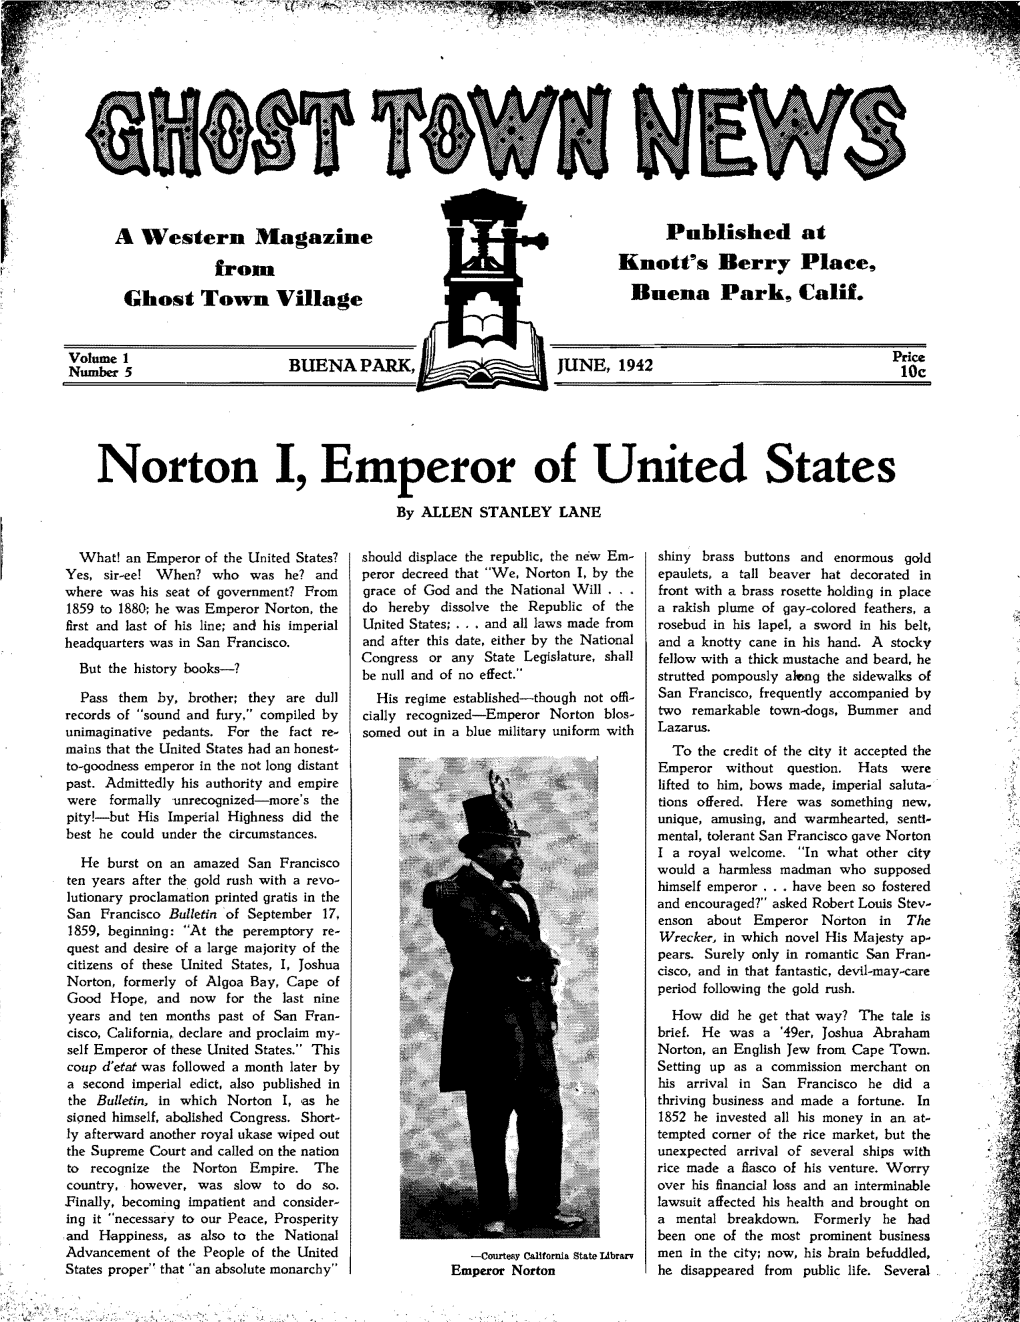 Norton I, Emperor of United States by ALLEN STANLEY LANE